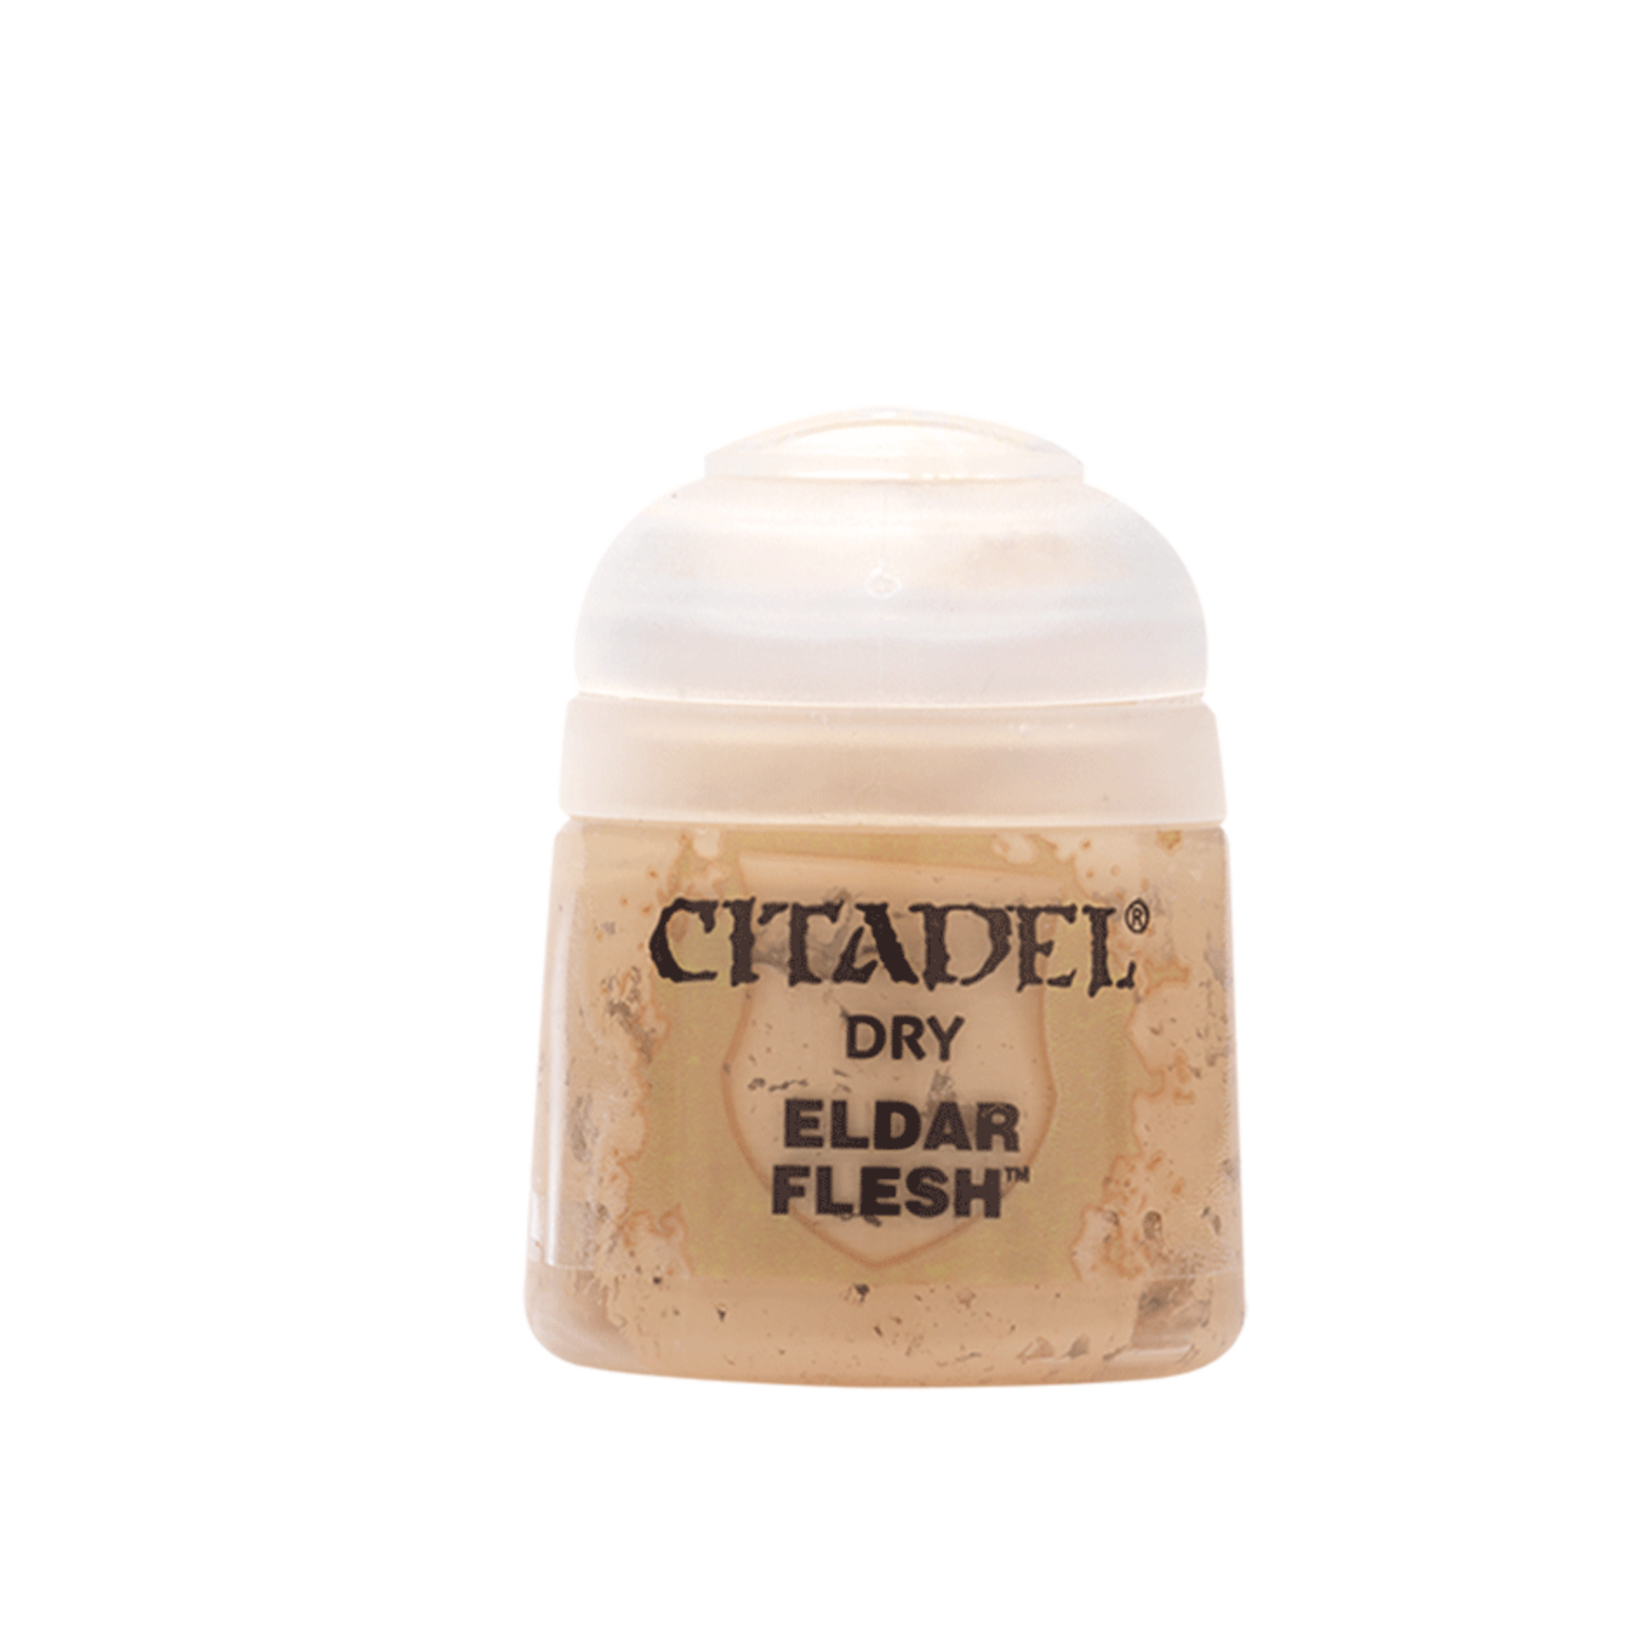 Citadel Dry Eldar Flesh 12ml pot